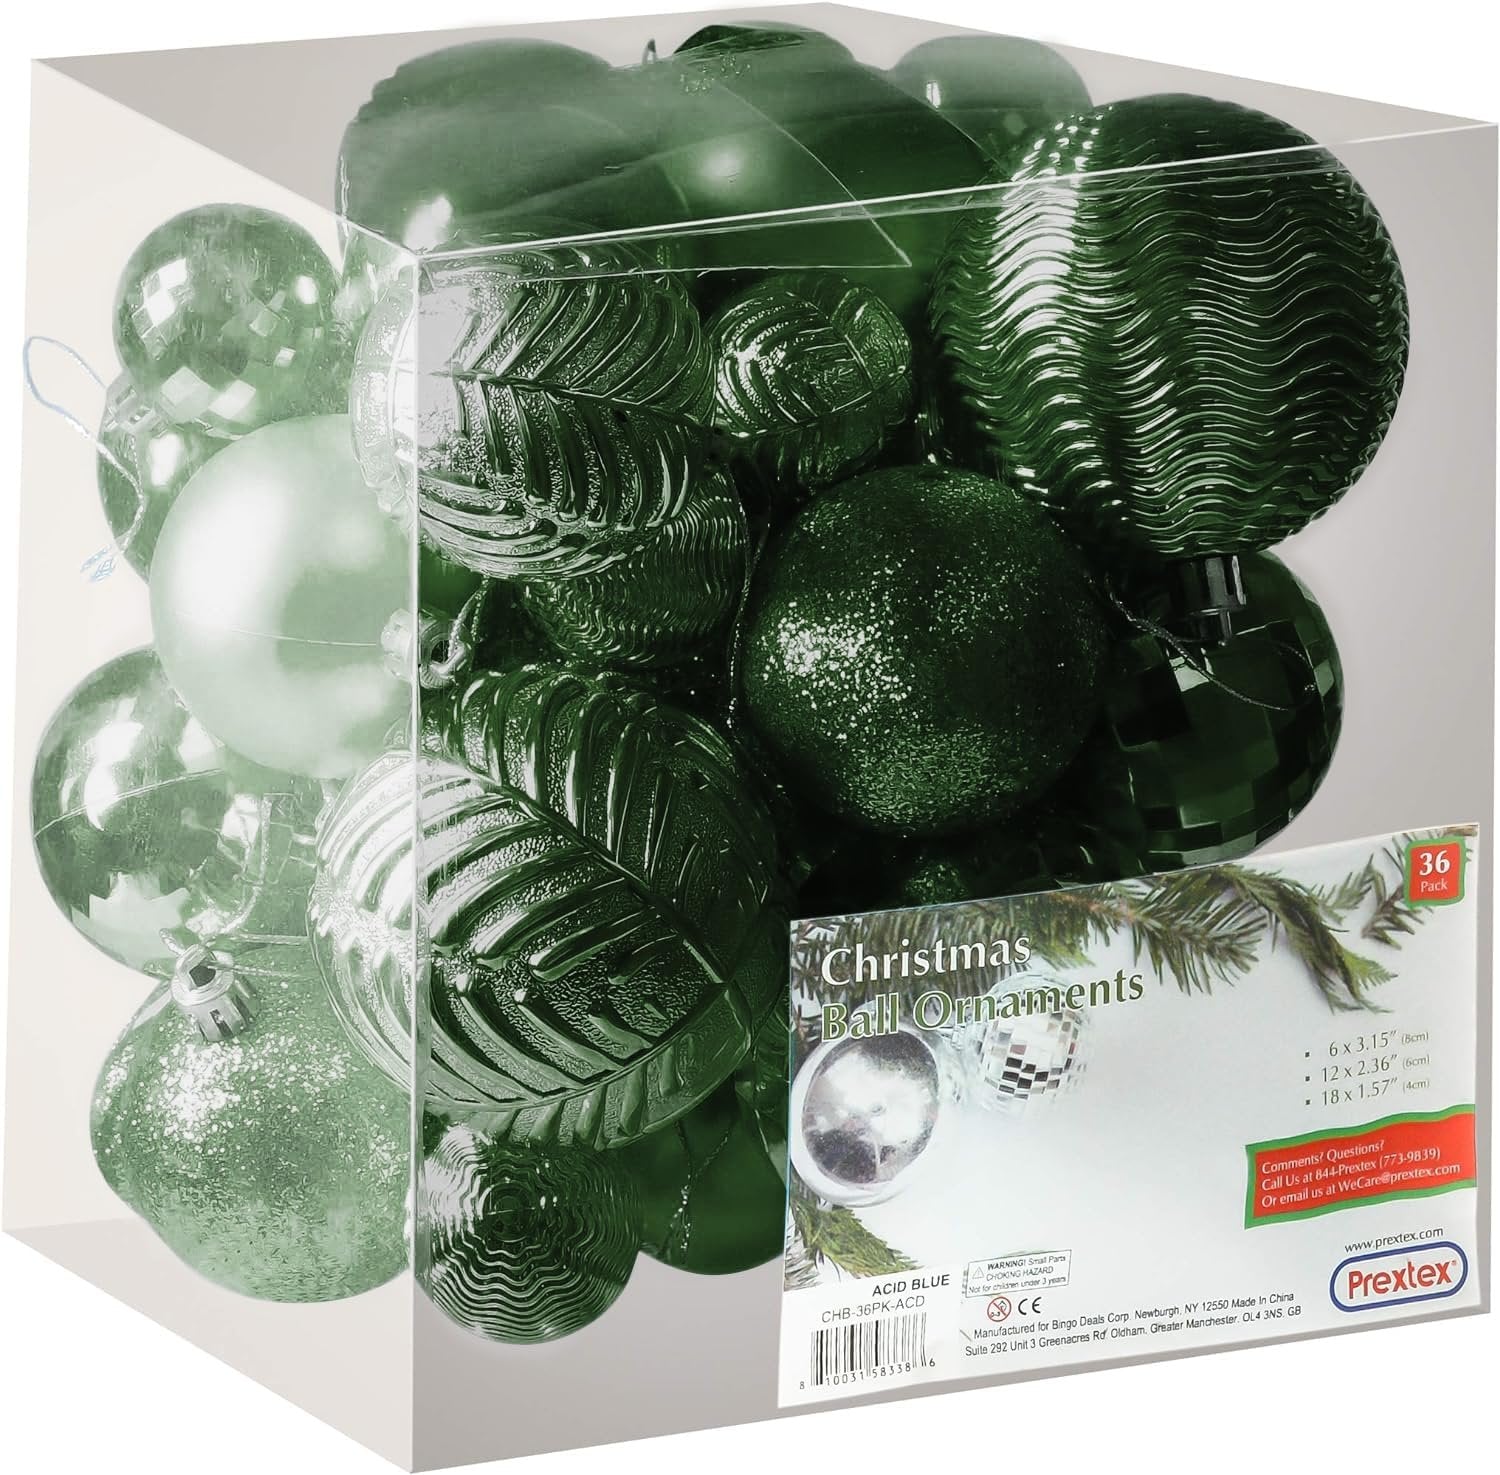 Prextex Christmas Tree Ornaments - Emerald Green Christmas Ball Ornaments Set for Christmas, Holiday, Wreath & Party Decorations (36 pcs - Small, Medium, Large) Shatterproof, 3 Size Combo